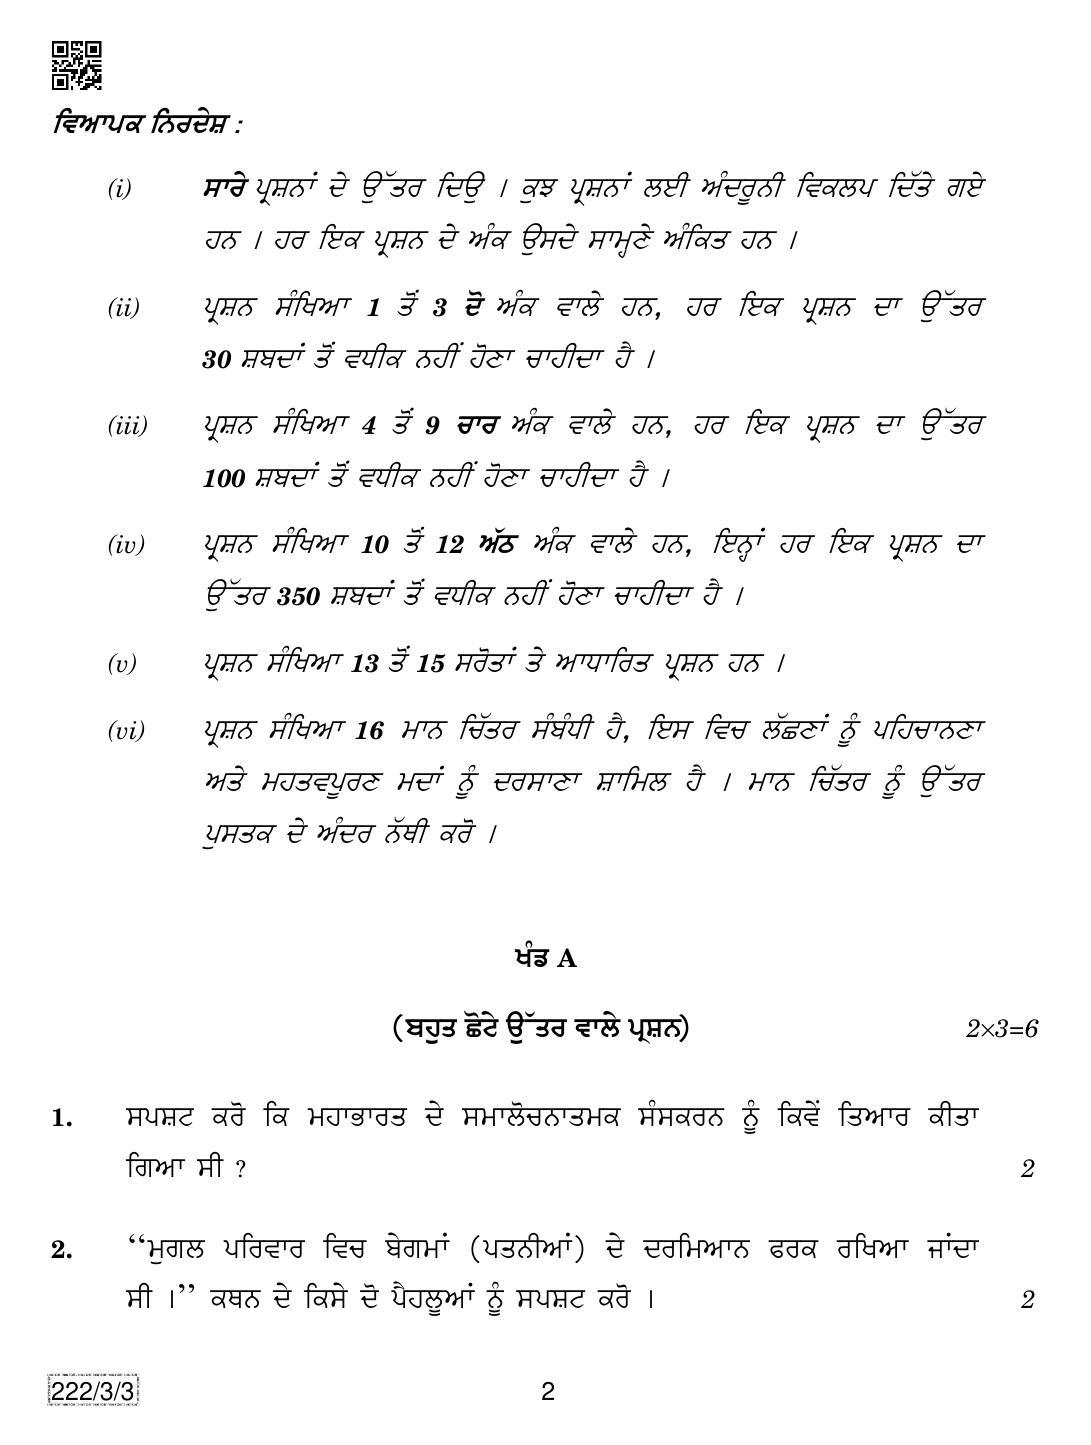 CBSE Class 12 222-3-3 Hiastory (Punjabi) 2019 Question Paper - Page 2